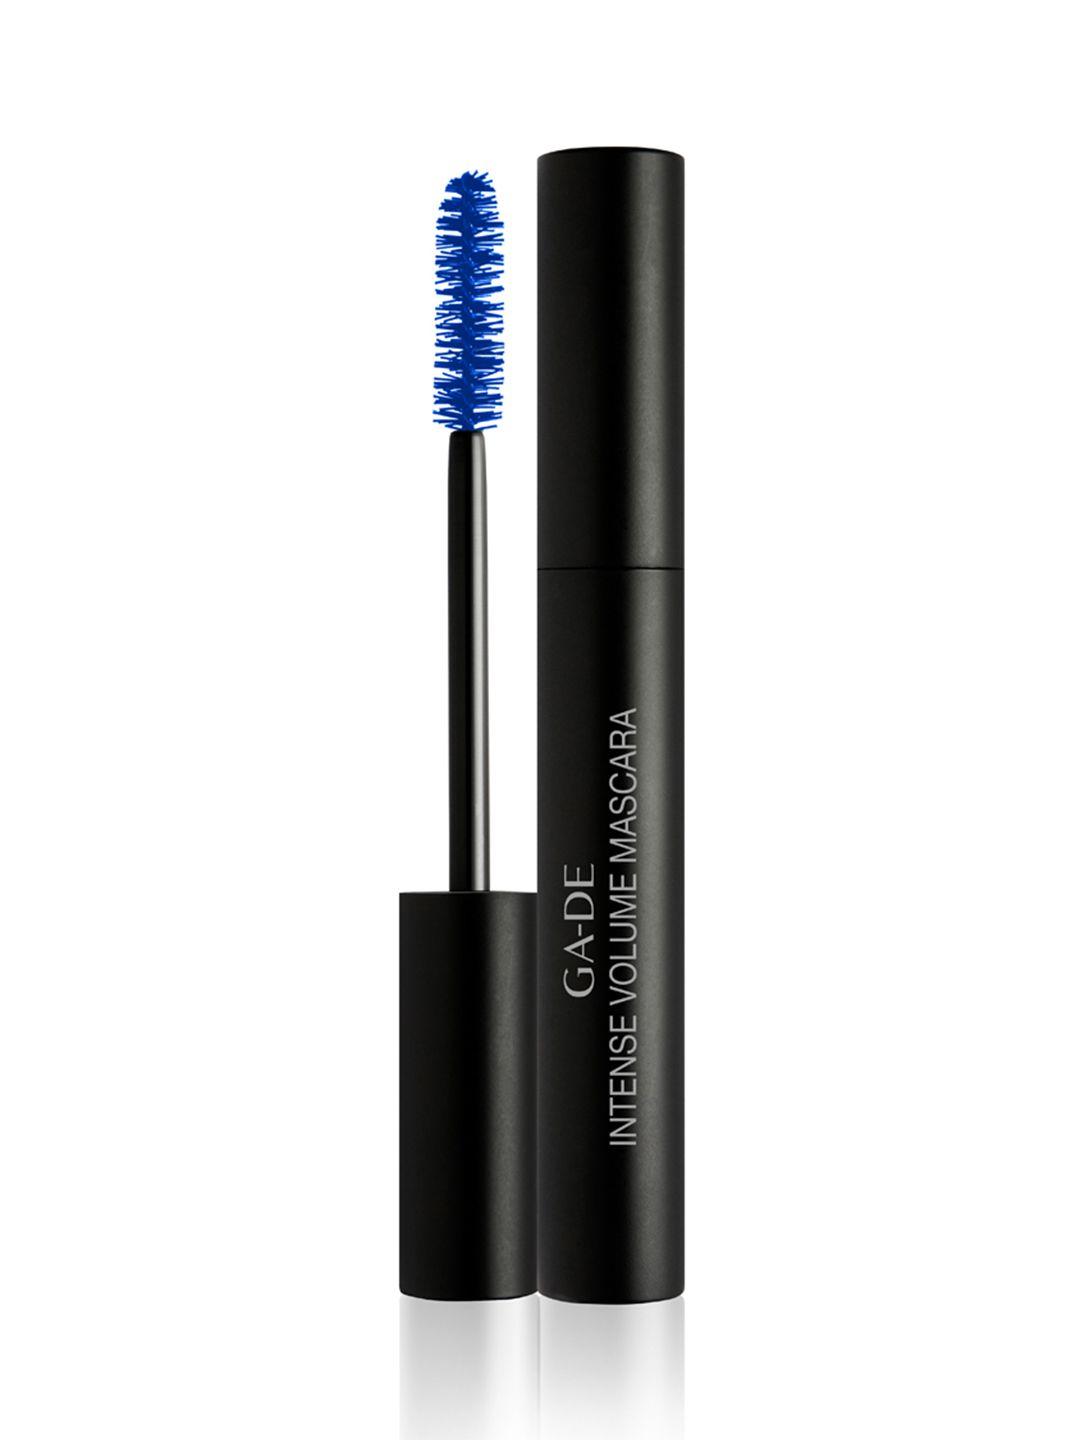 ga-de intense volume long-lasting & quick drying mascara 8ml - electric dark blue